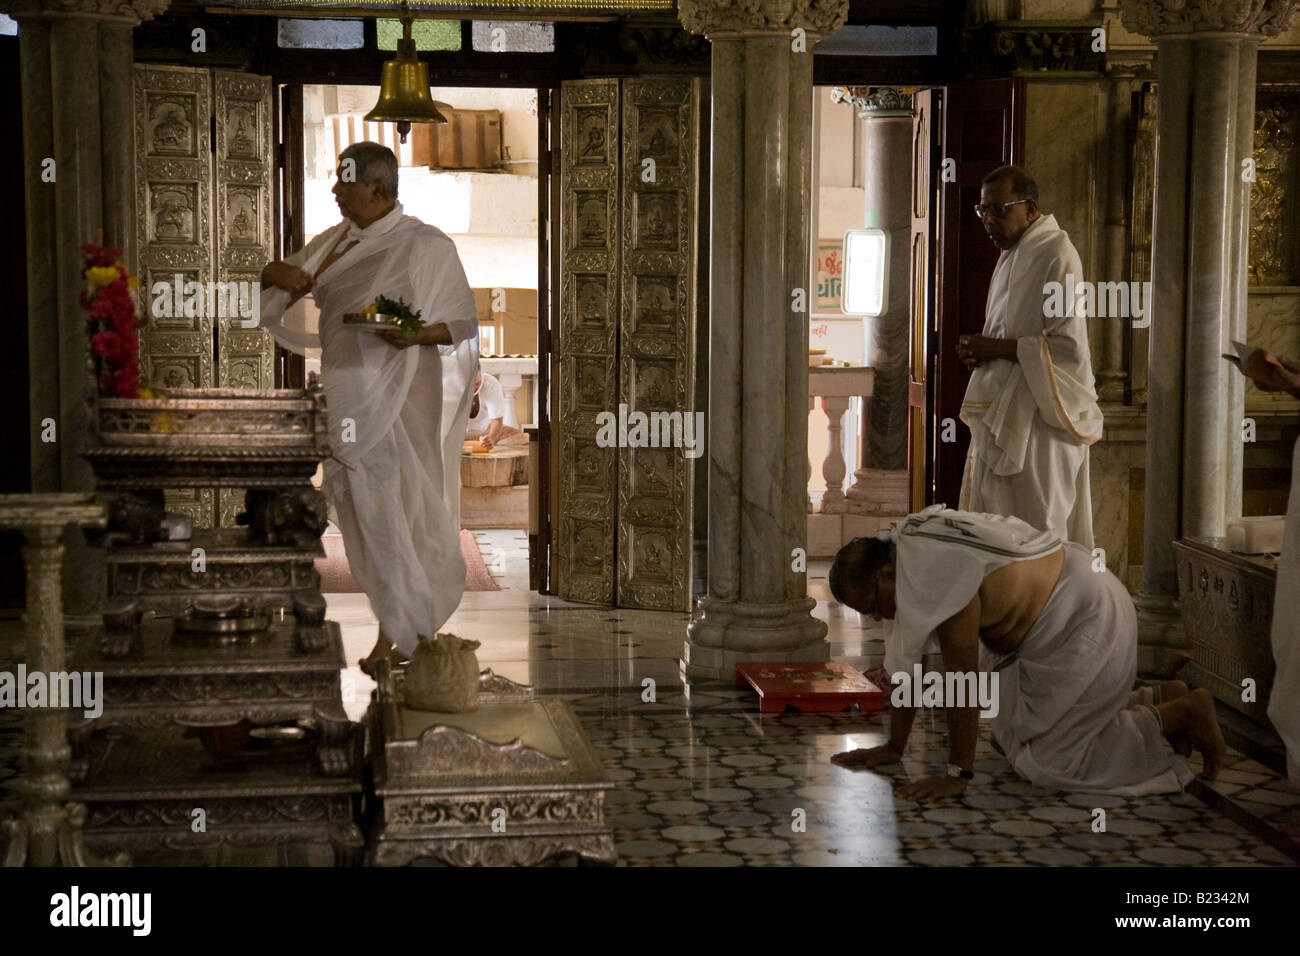 Devotees inside the Shri Adishwarji Jain temple in the Walkeshwar area of Mumbai, Maharastra, India Stock Photo